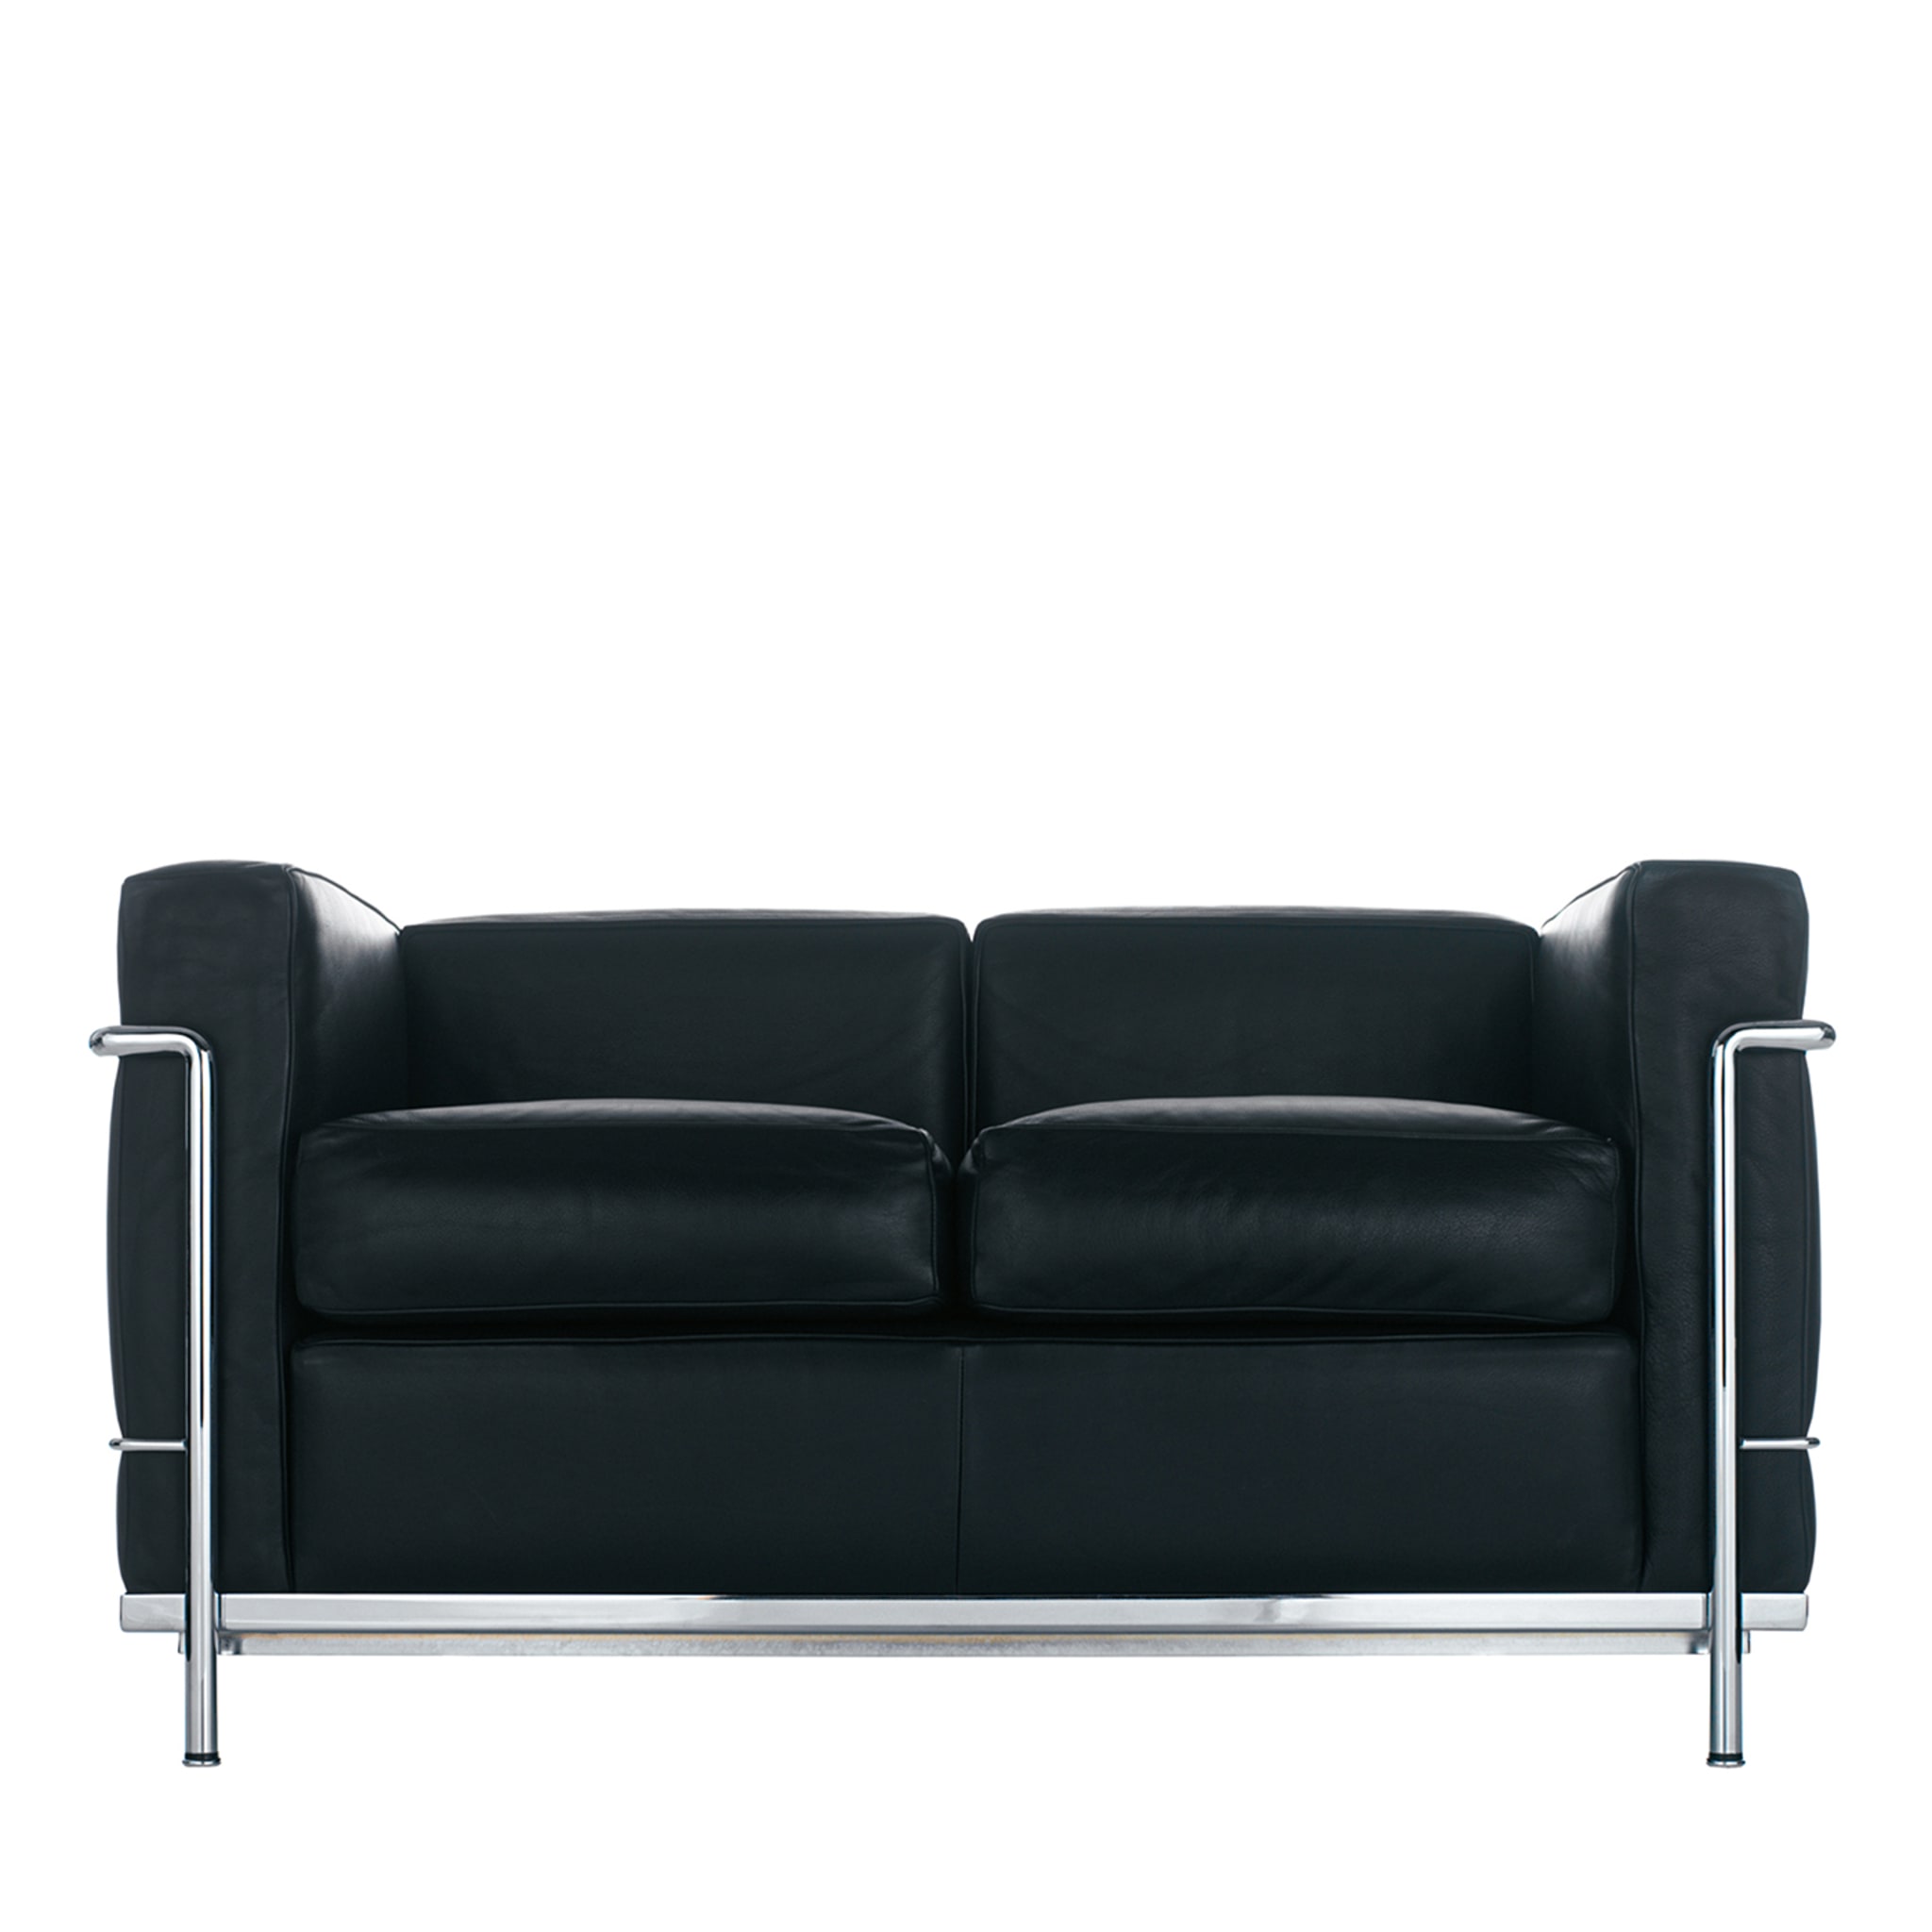 2 Fauteuil Grand Confort, Petit Modèle By Le Corbusier & Pierre Jeanneret & Charlotte Perriand - Graphite Leather 2-Seater Sofa - Main view